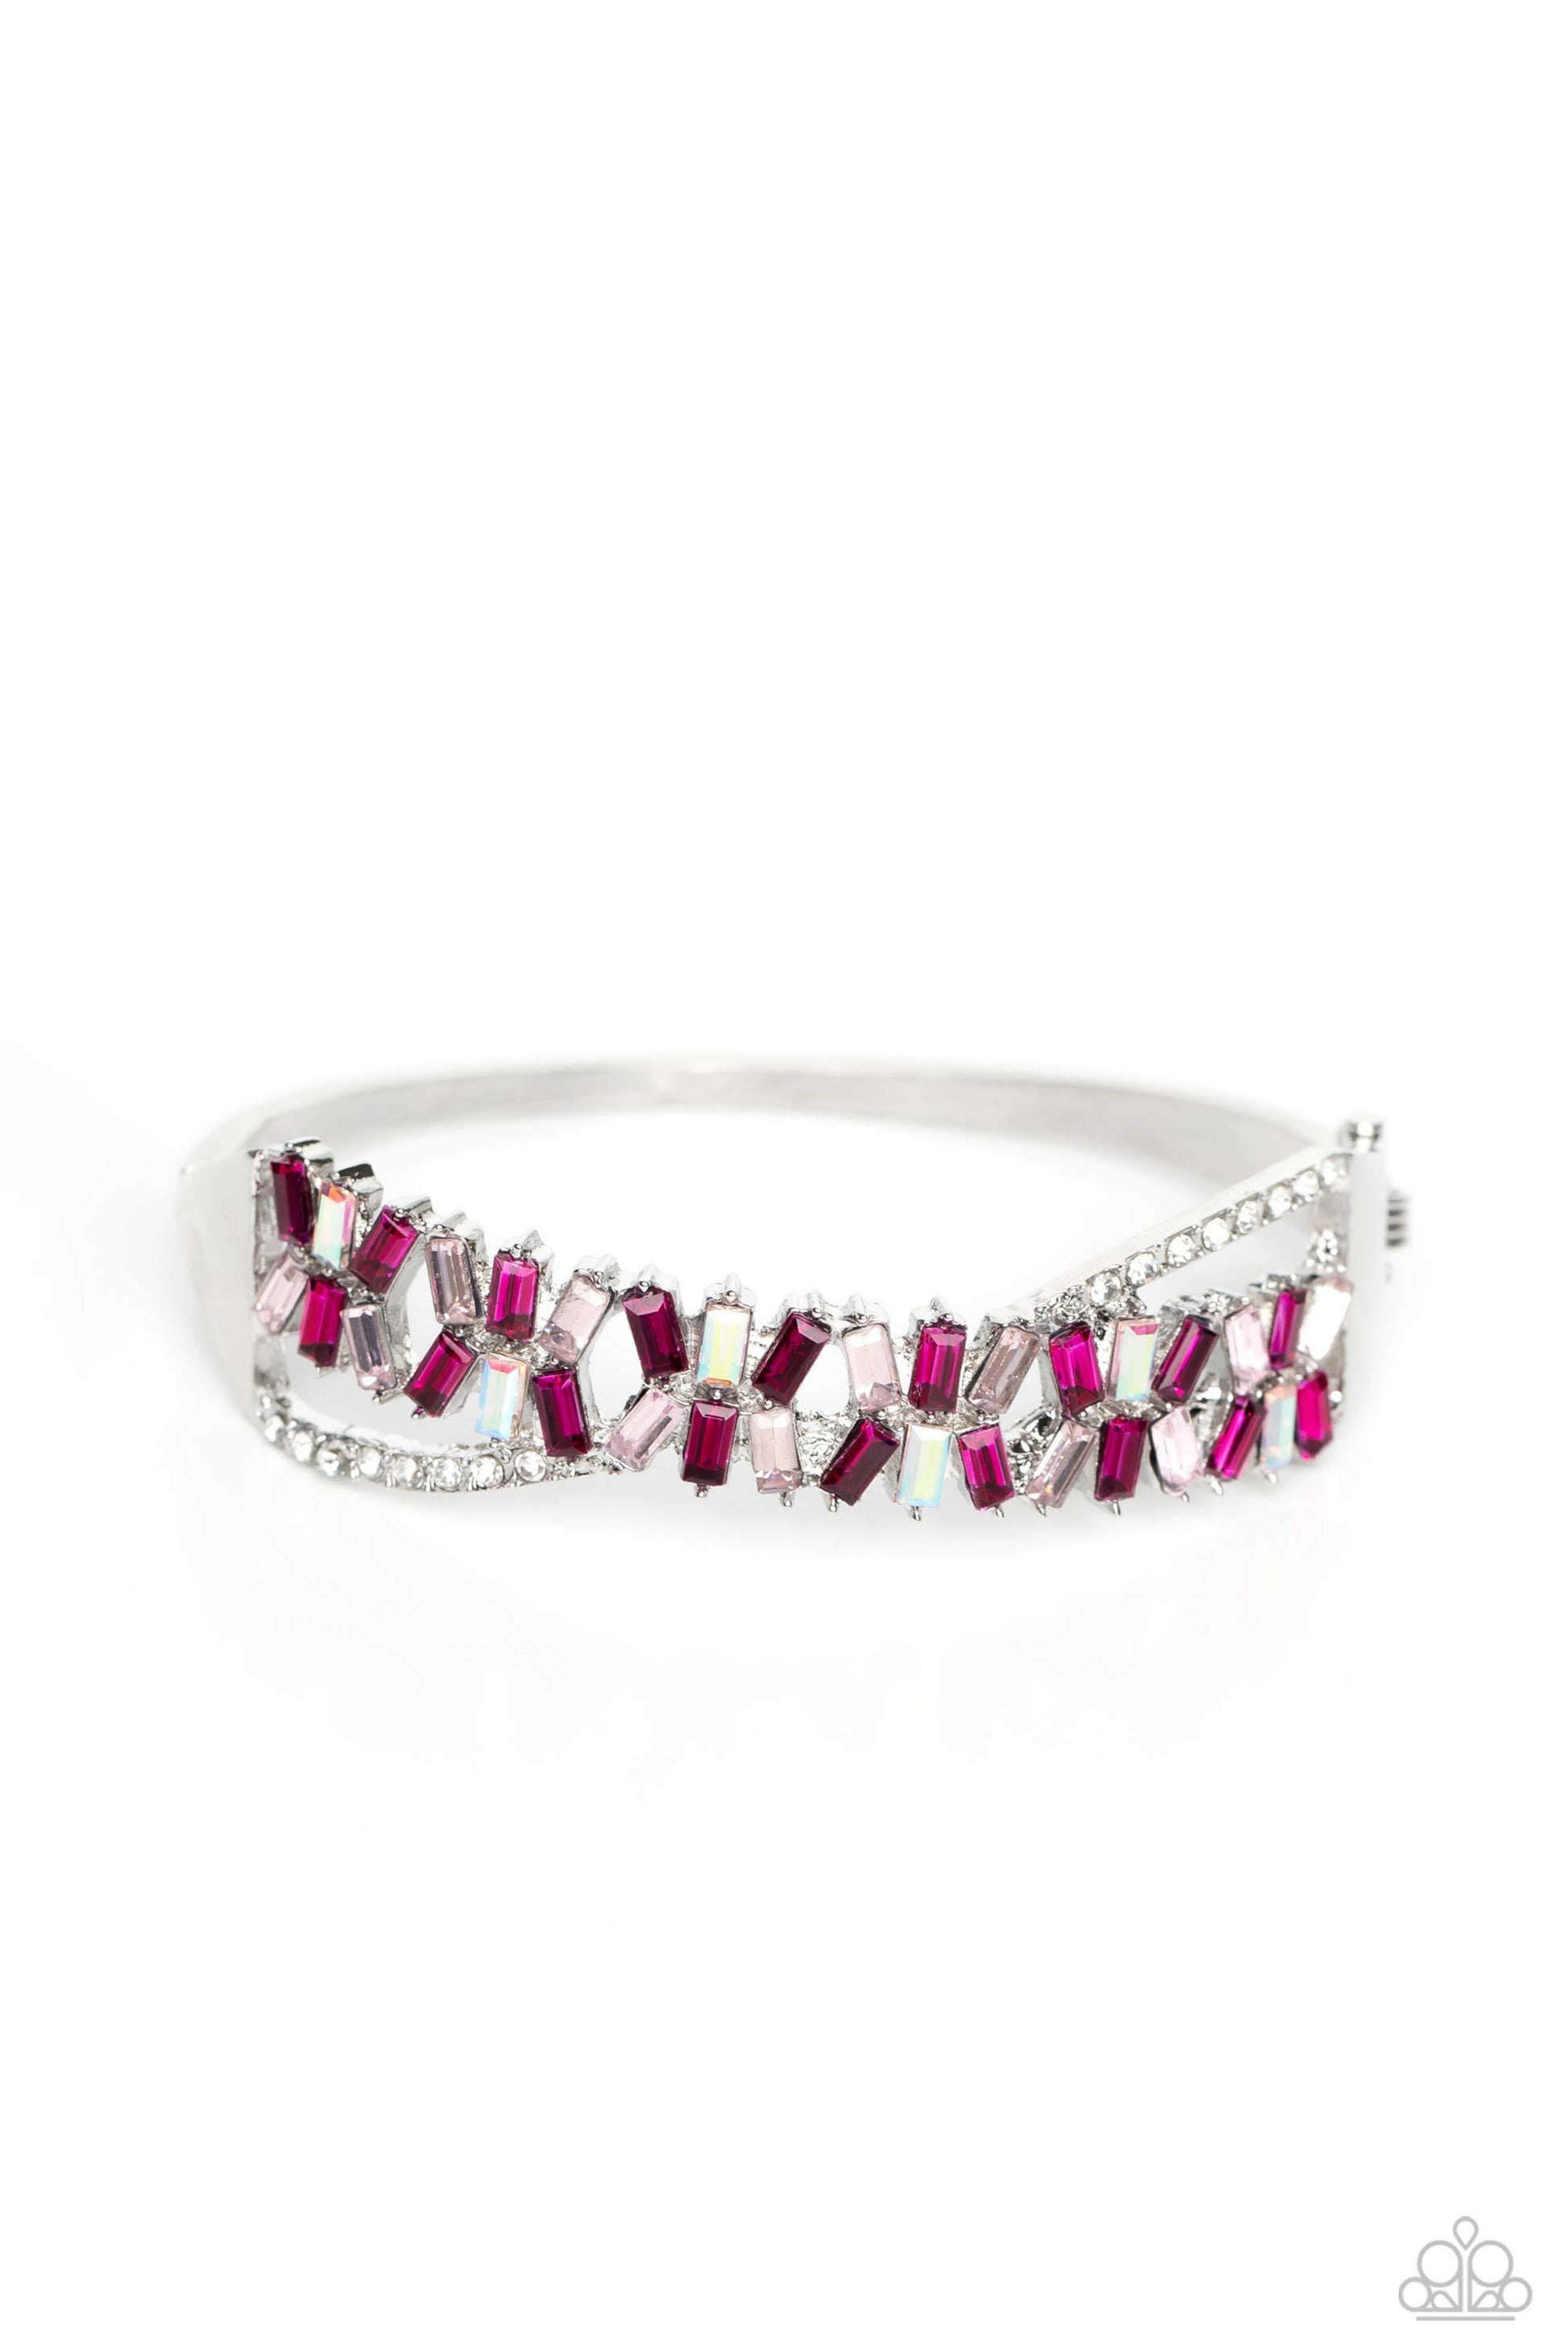 Paparazzi Accessories - Timeless Trifecta - Pink Bracelet - Bling by JessieK